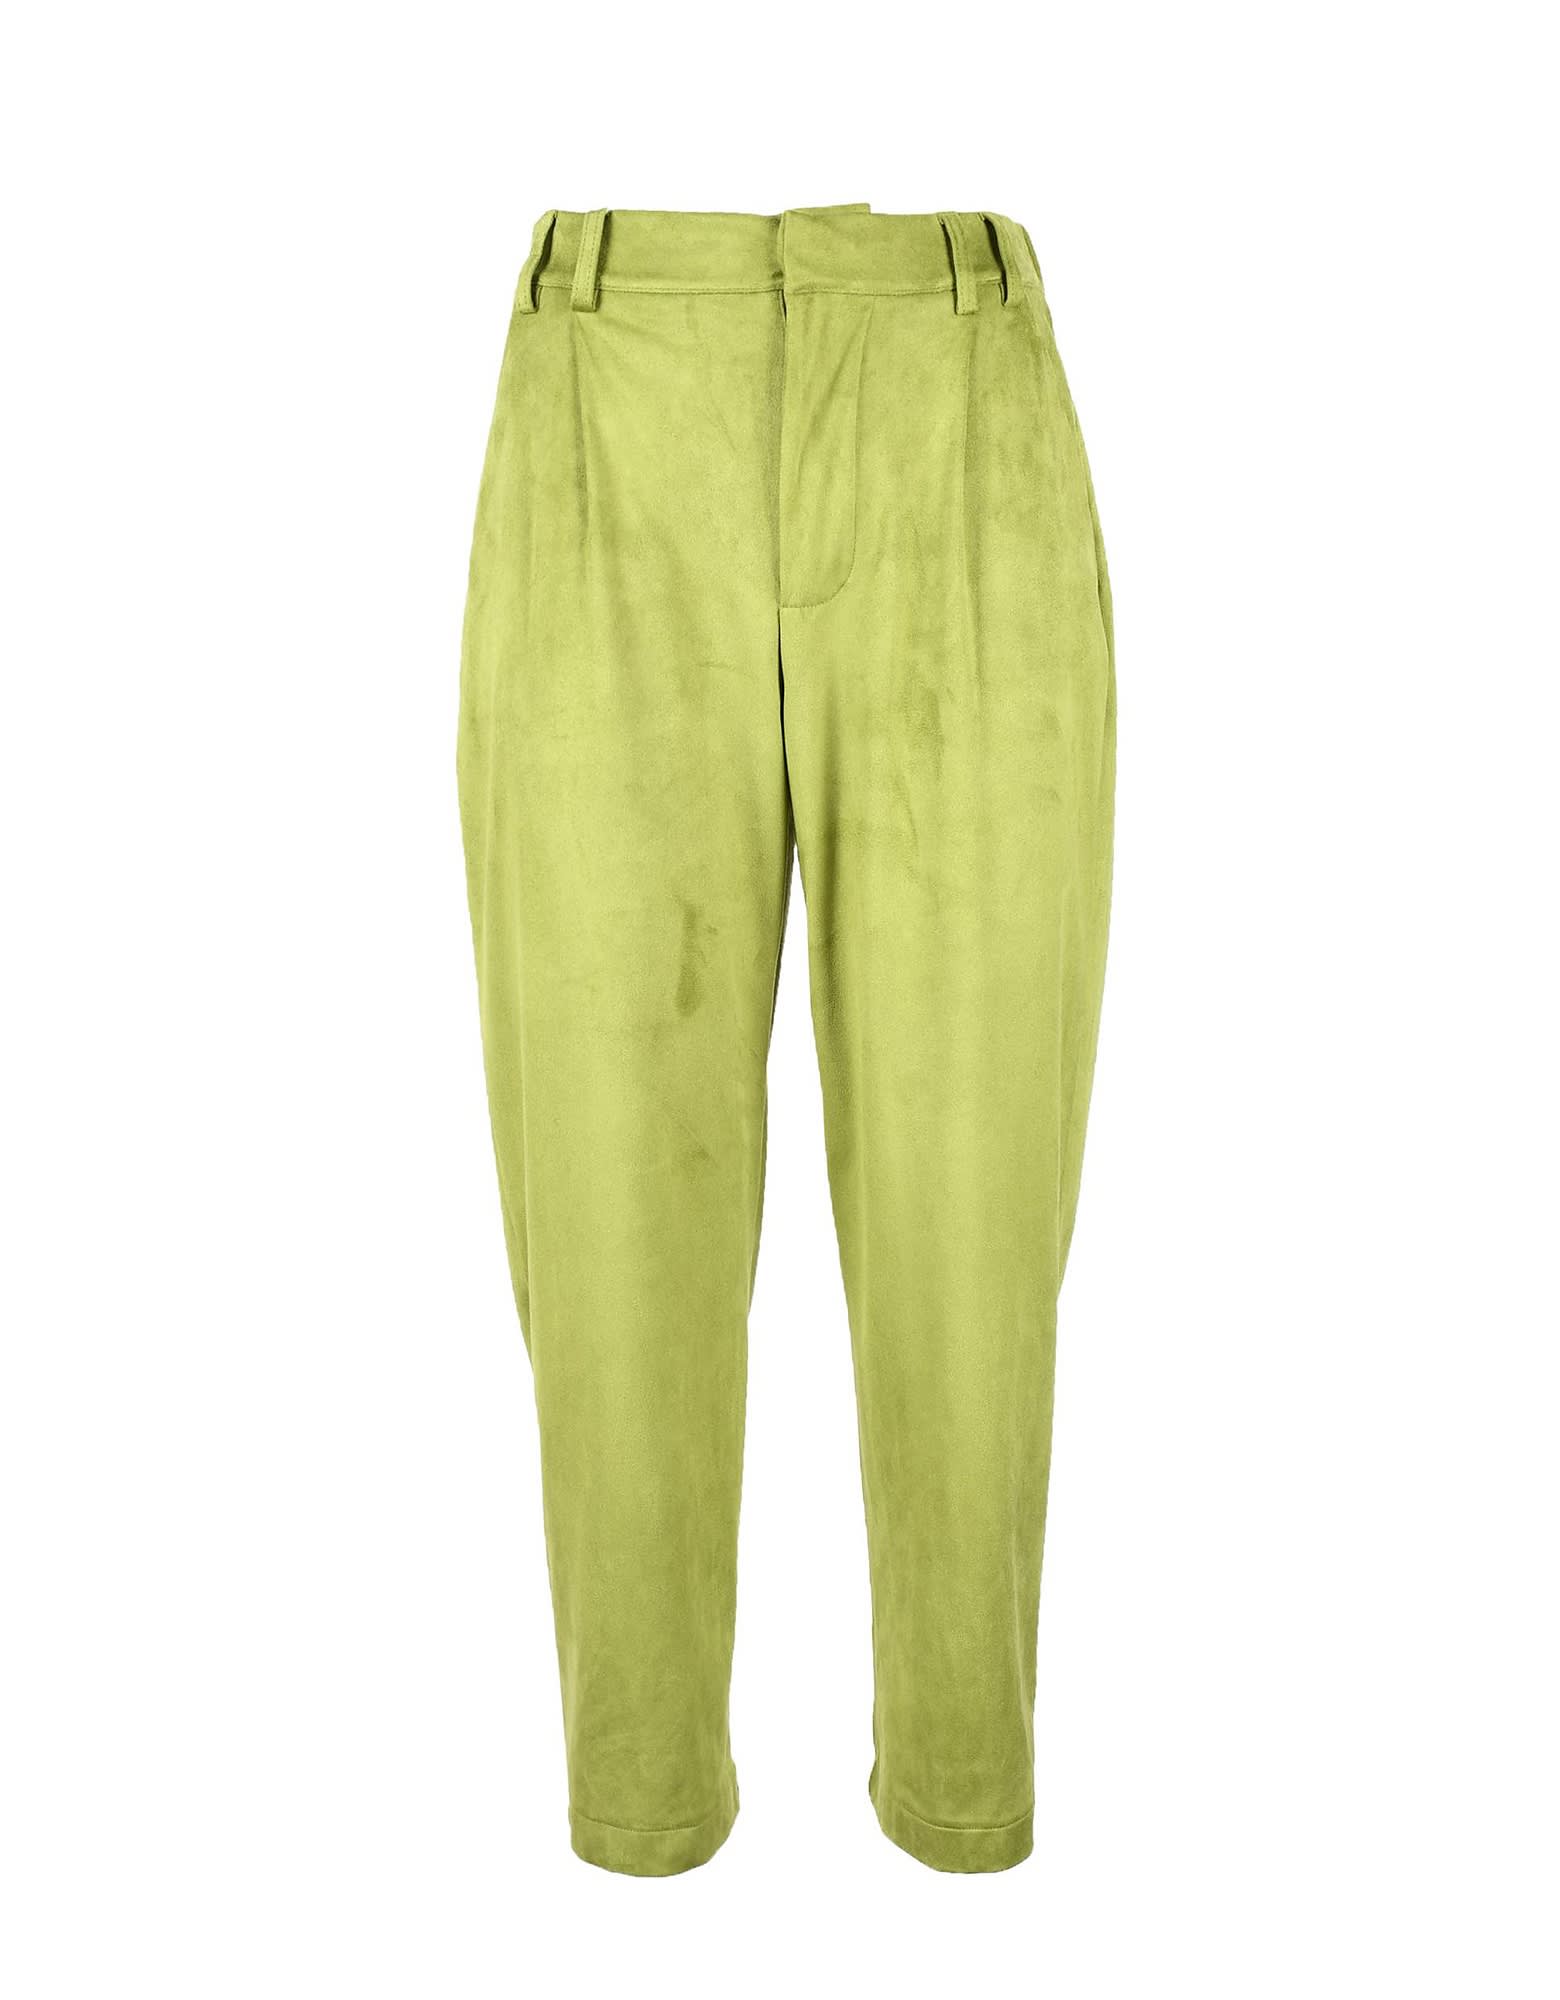 Womens Green Pants